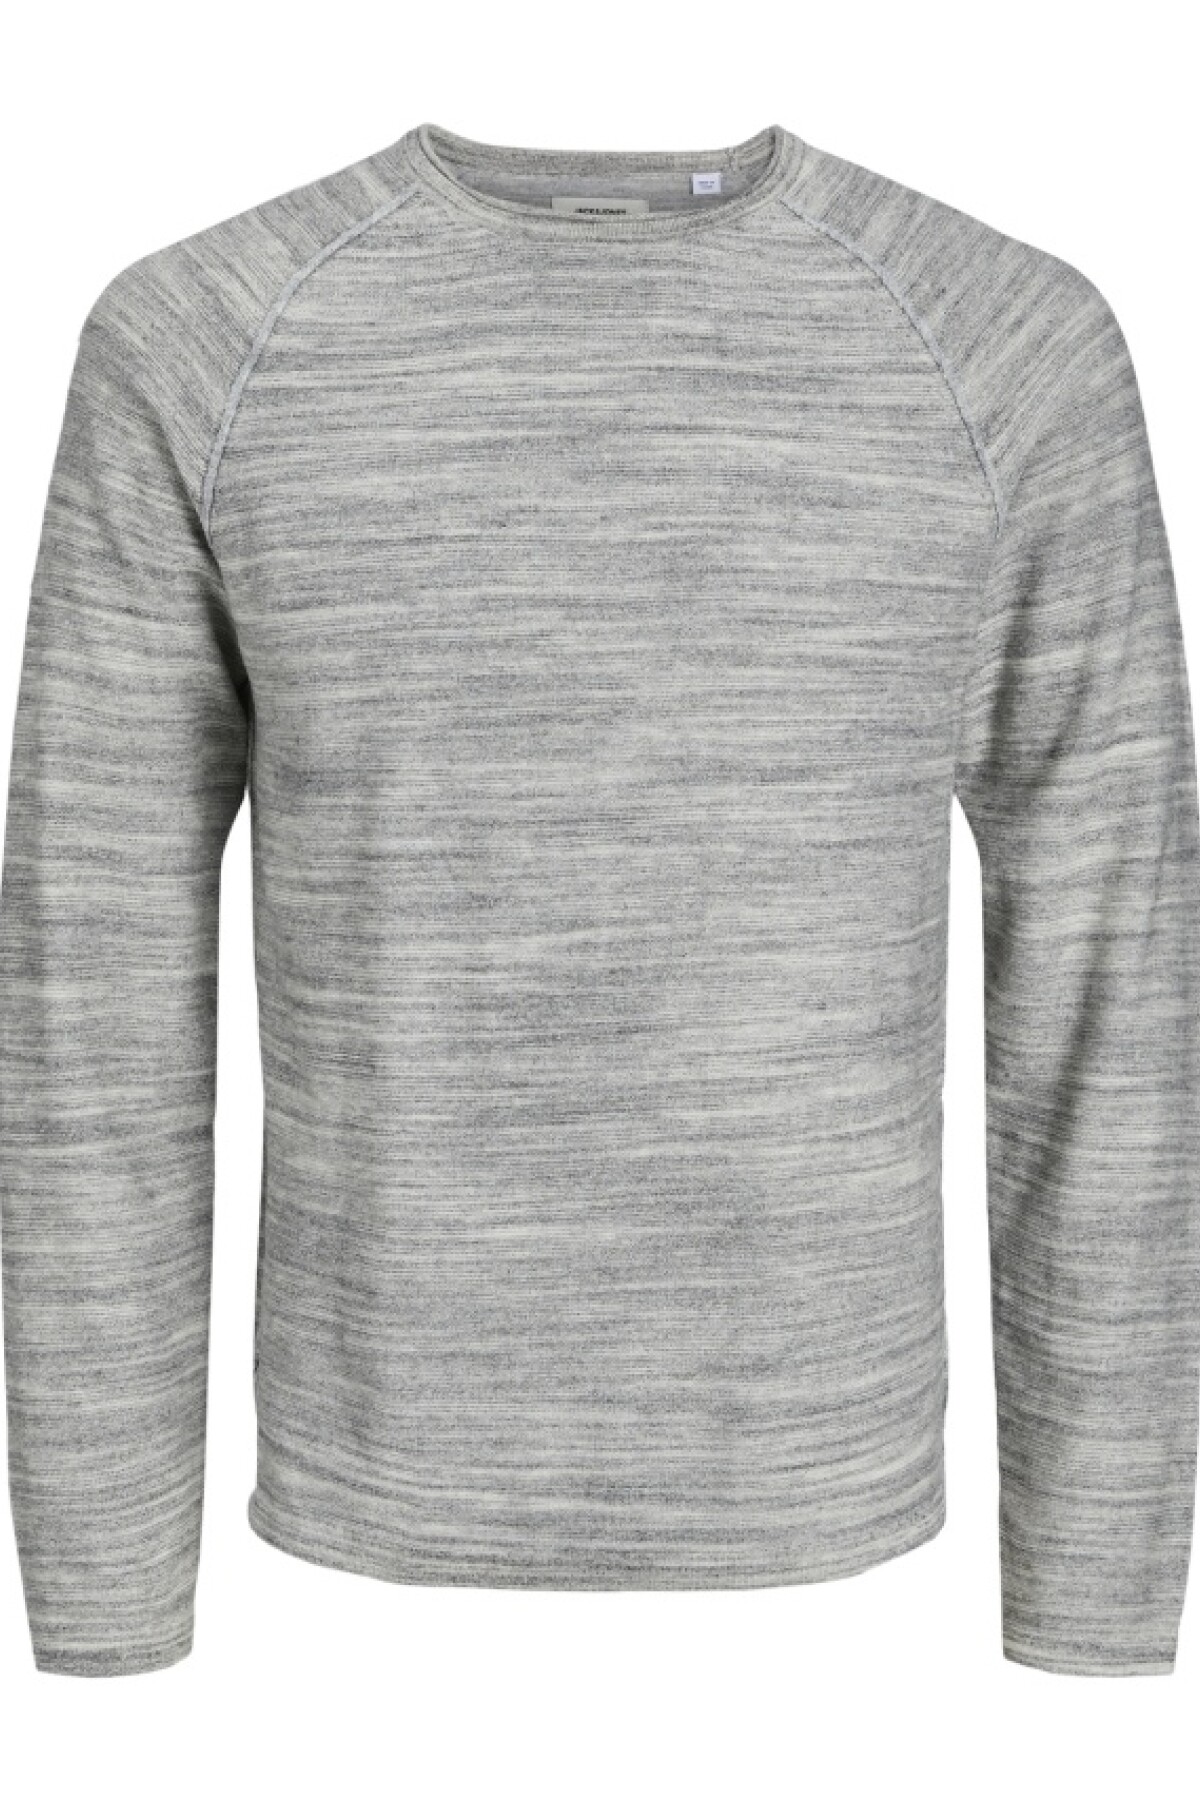 Sweater Hunion Tejido Jaspeado Y Ligero Light Grey Melange